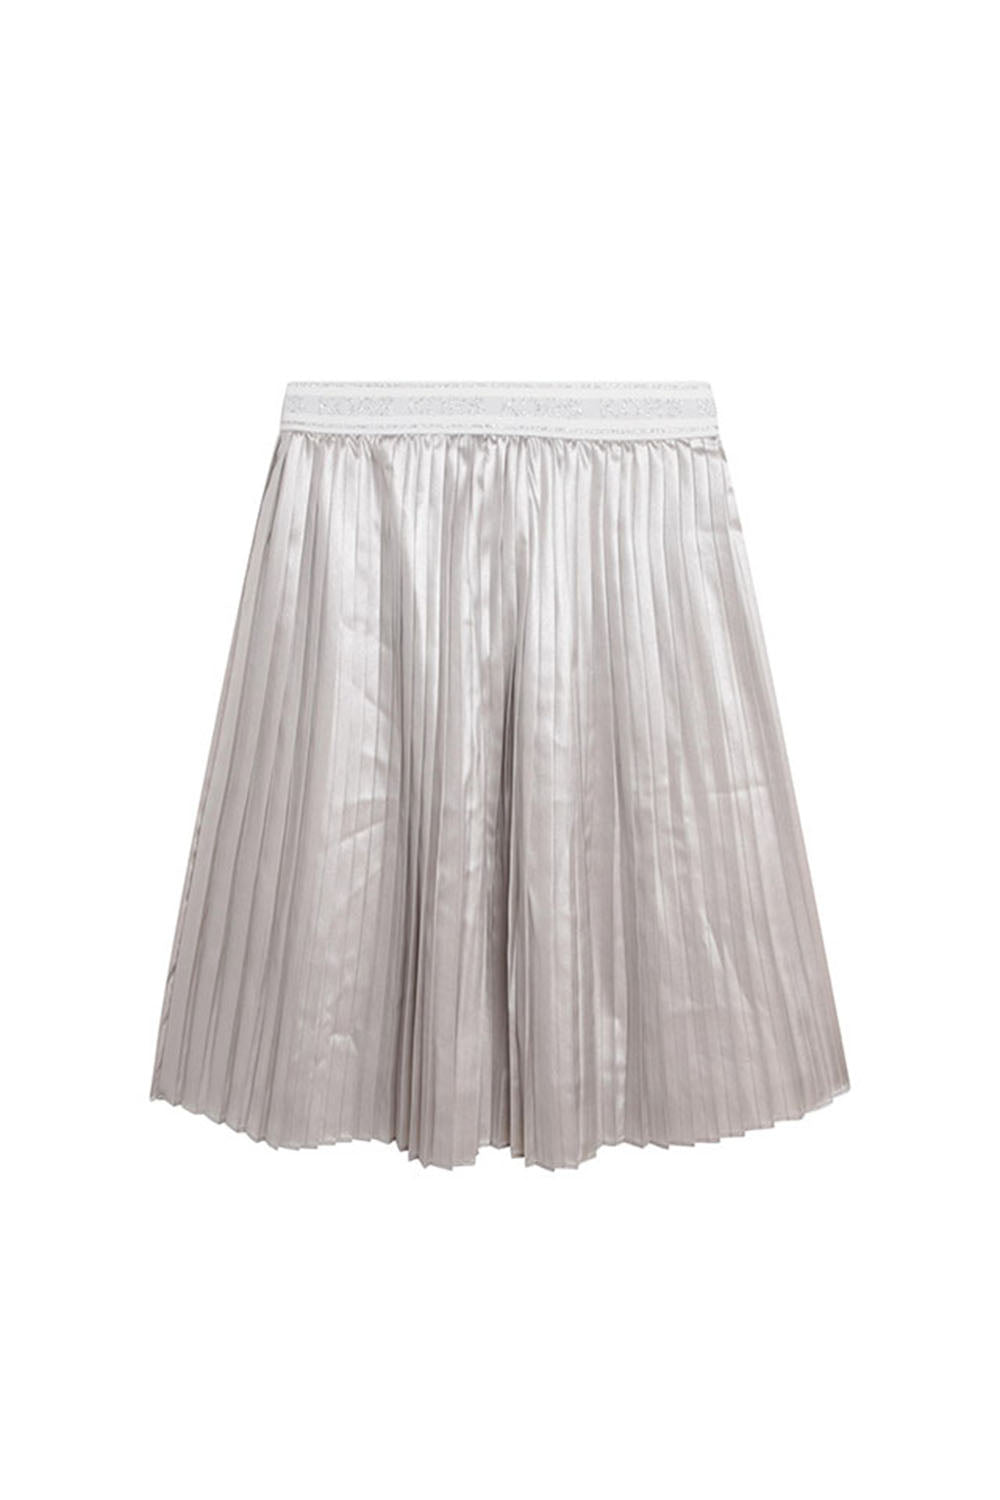 Mk Pleated Silver Skirt - Maison7